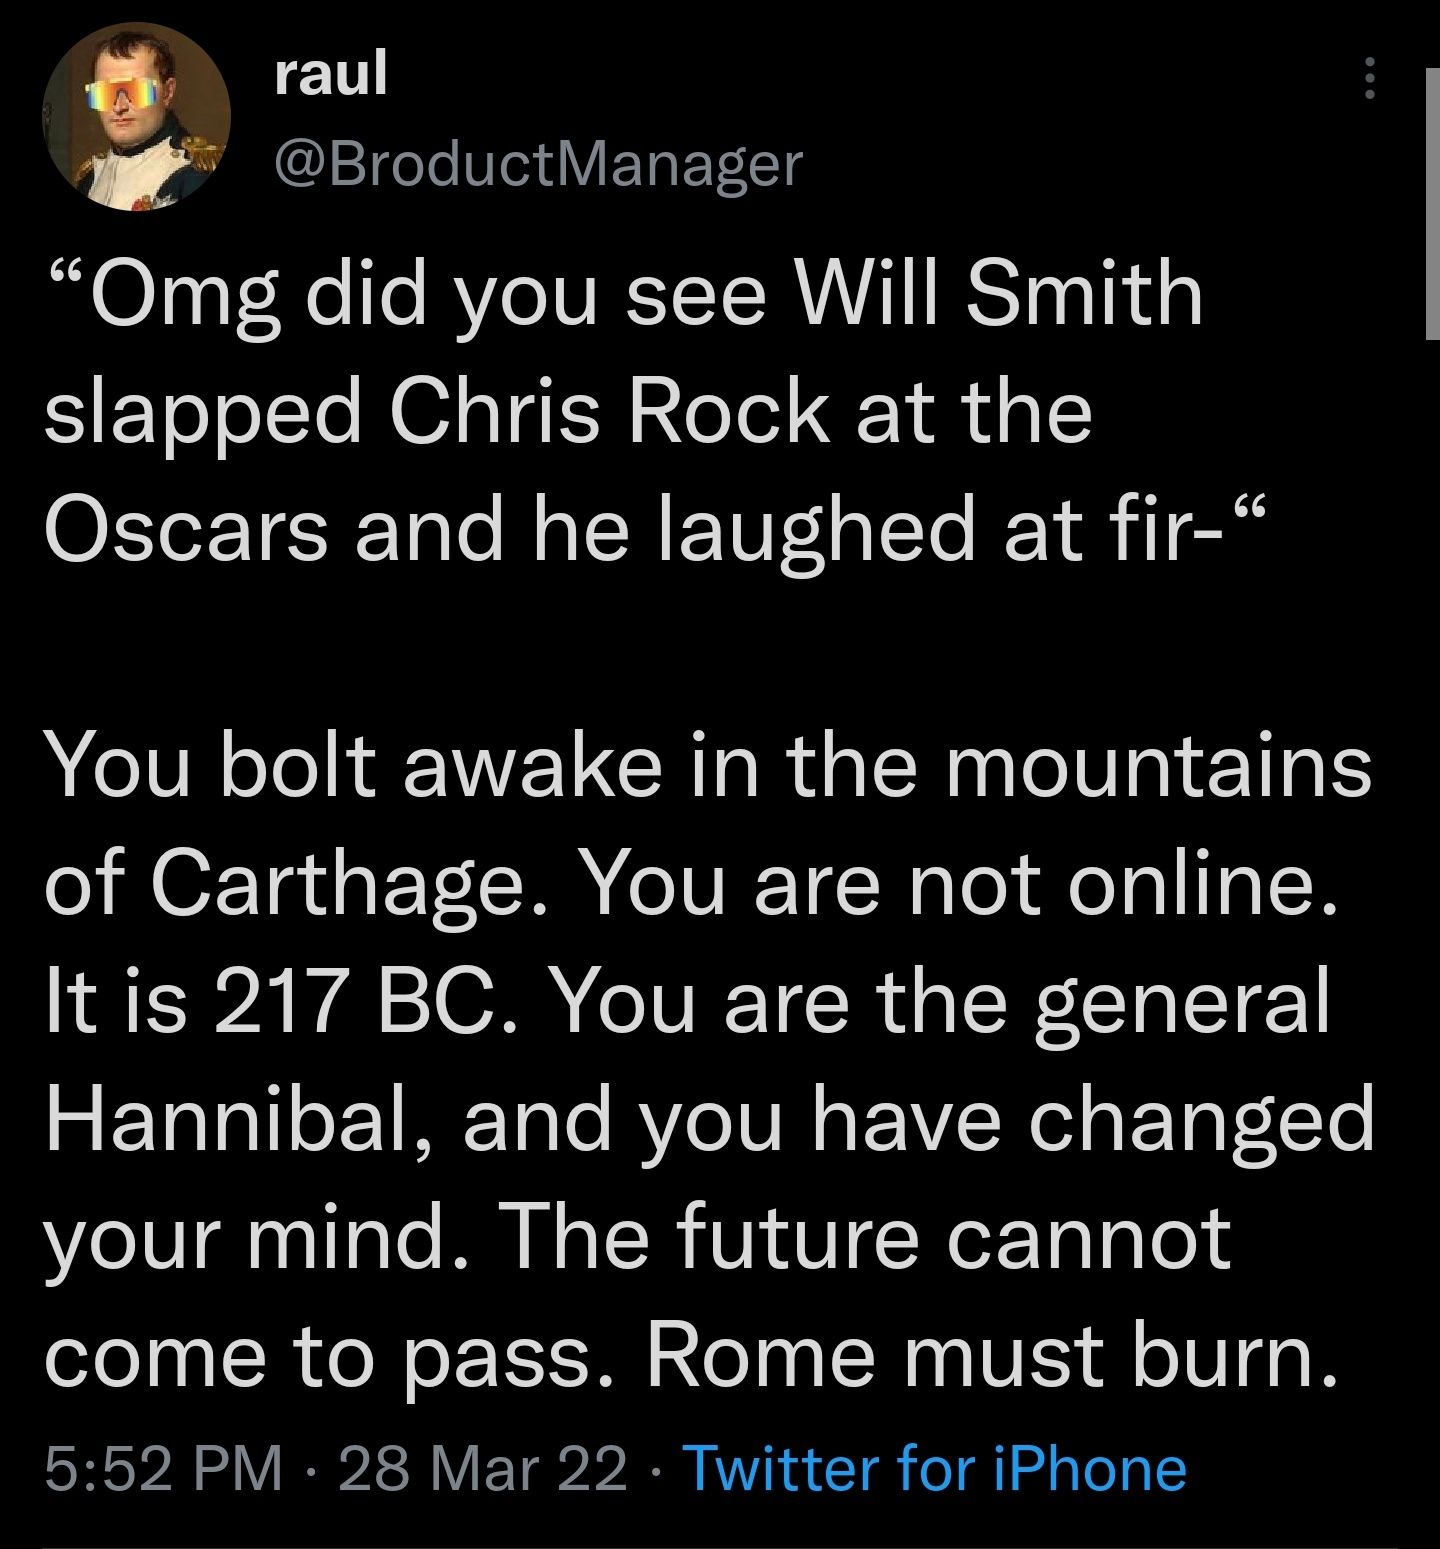 Hannibal burns Rome